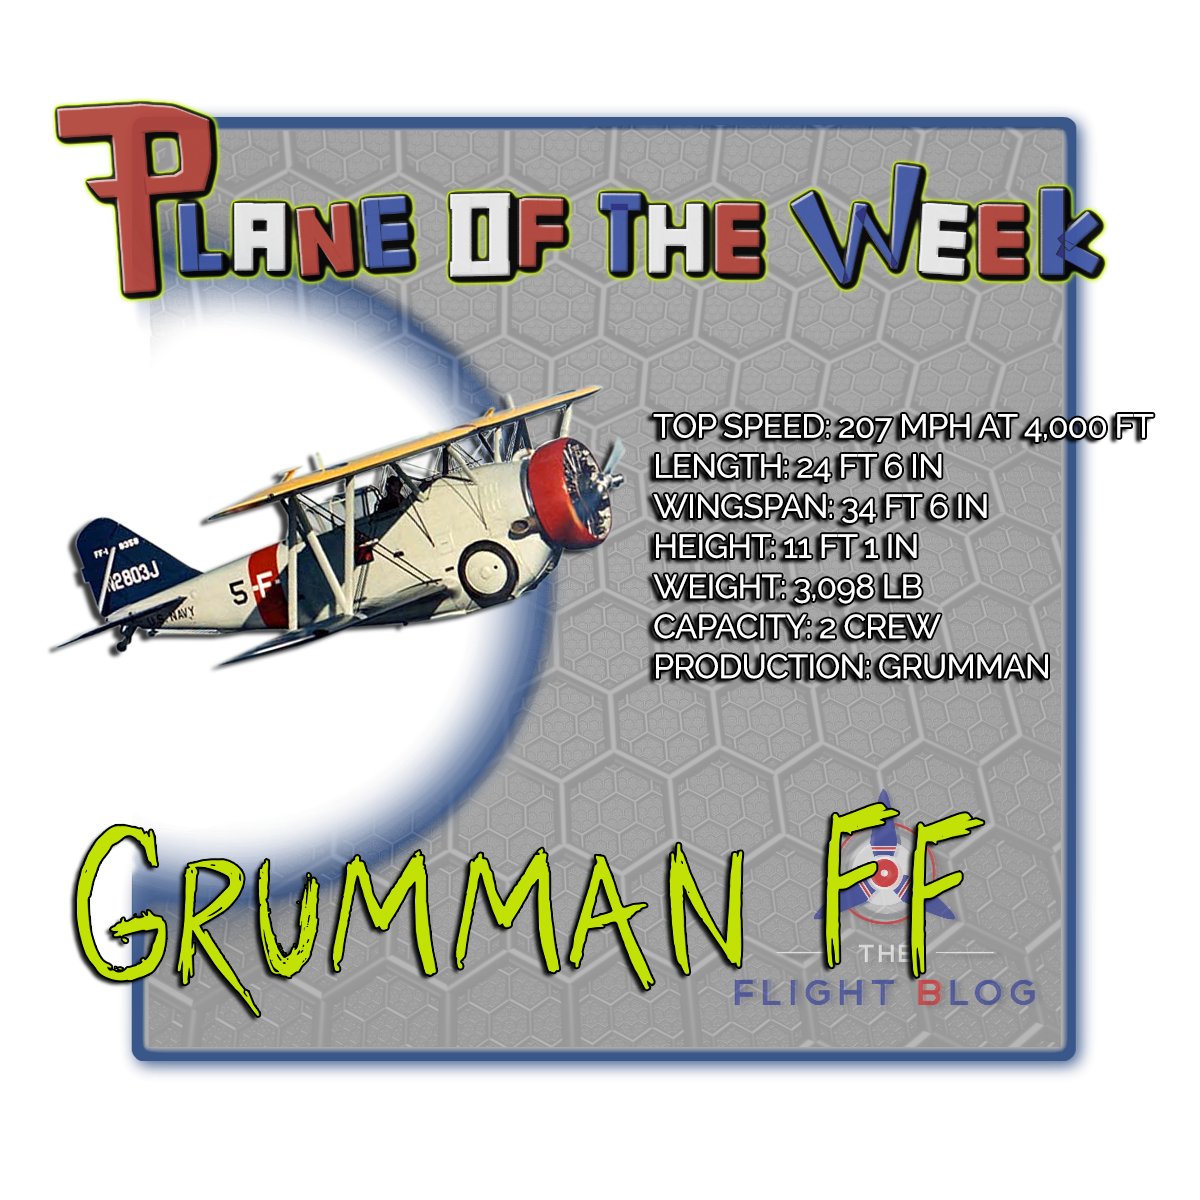 Grumman FF specifications